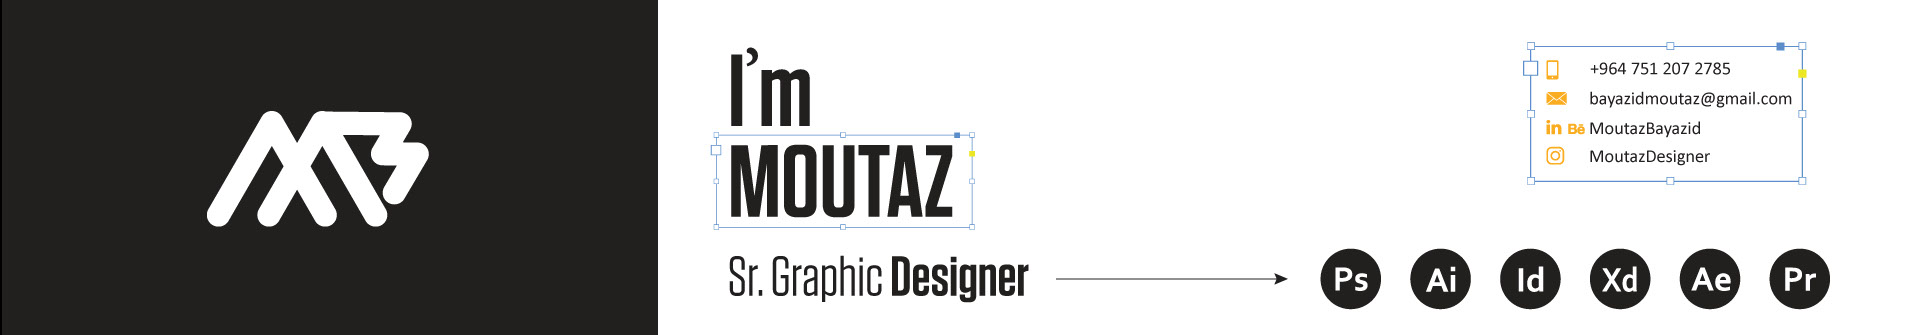 Moutaz Bayazid's profile banner